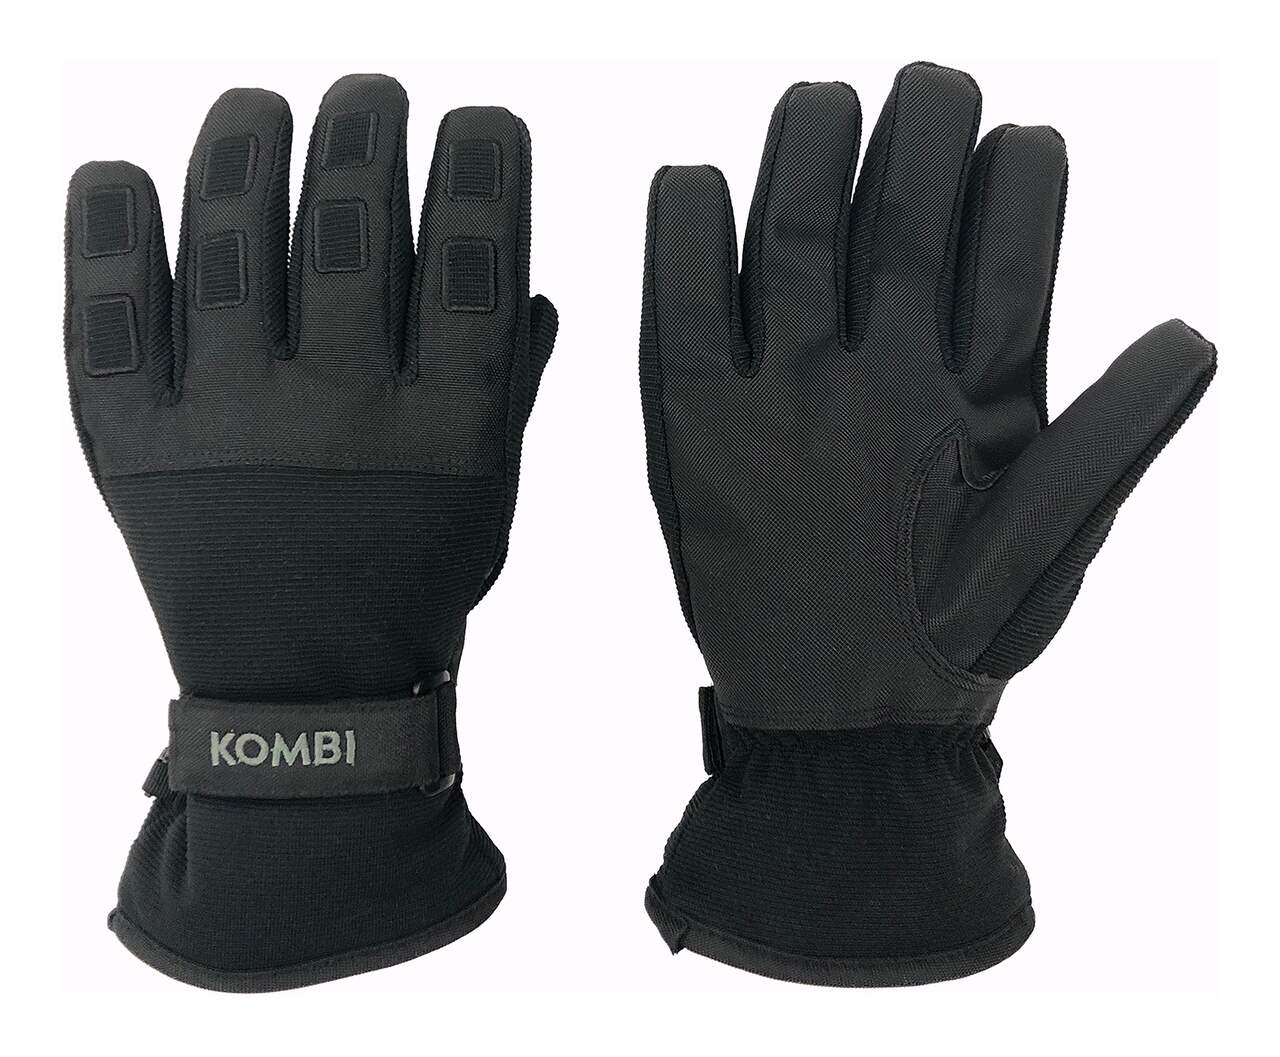 Kombi Men's Thermal Insulated Touch Screen Winter Ski Snowboard Gloves Warm  Waterproof